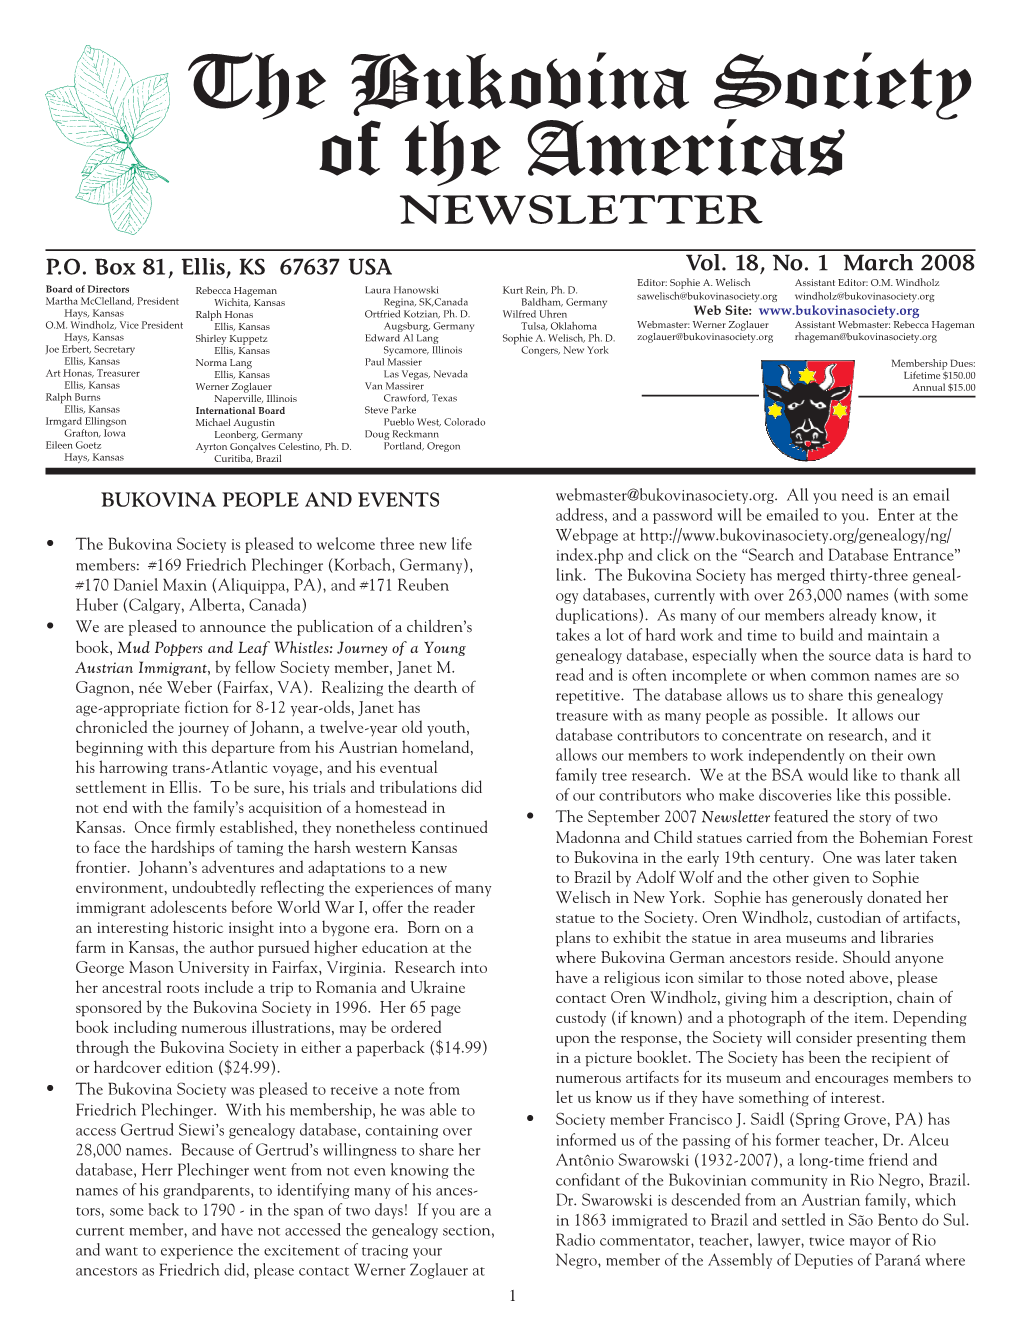 The Bukovina Society of the Americas NEWSLETTER